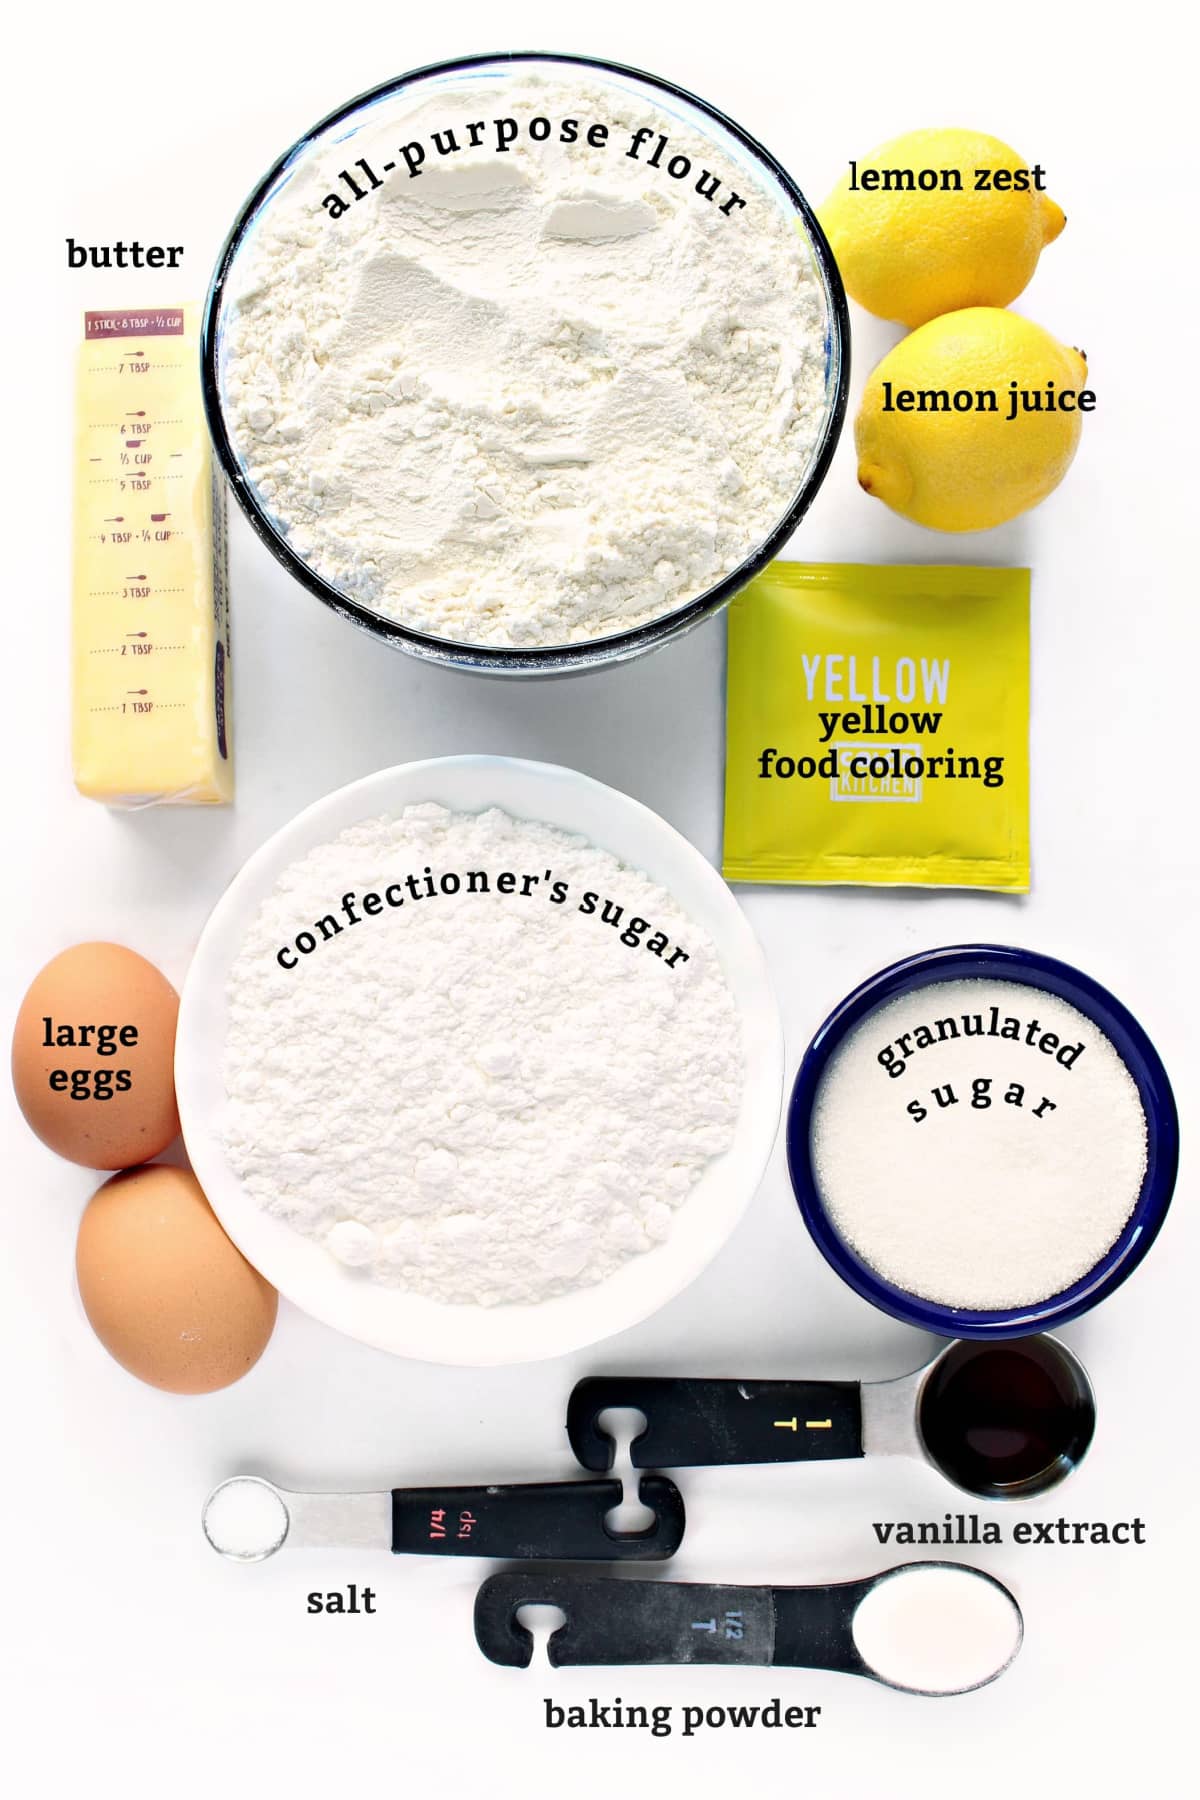 Ingredients: butter, flour, lemons, large eggs, yellow coloring, confectioners' sugar, granulated sugar, salt, vanilla, baking powder.